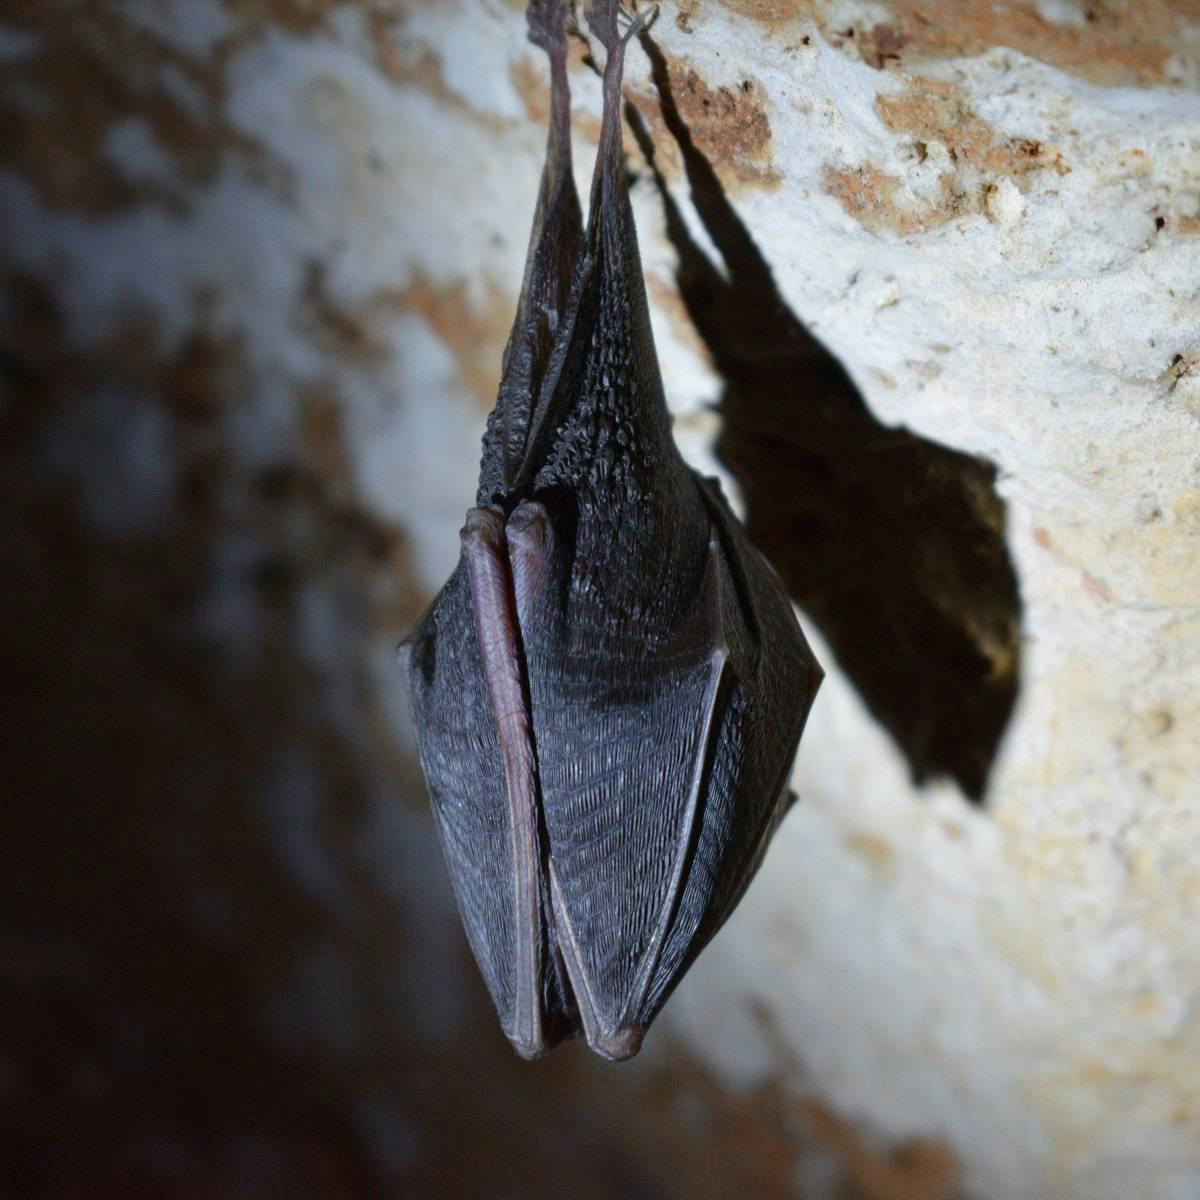 A bat sleeps upside down in a cave